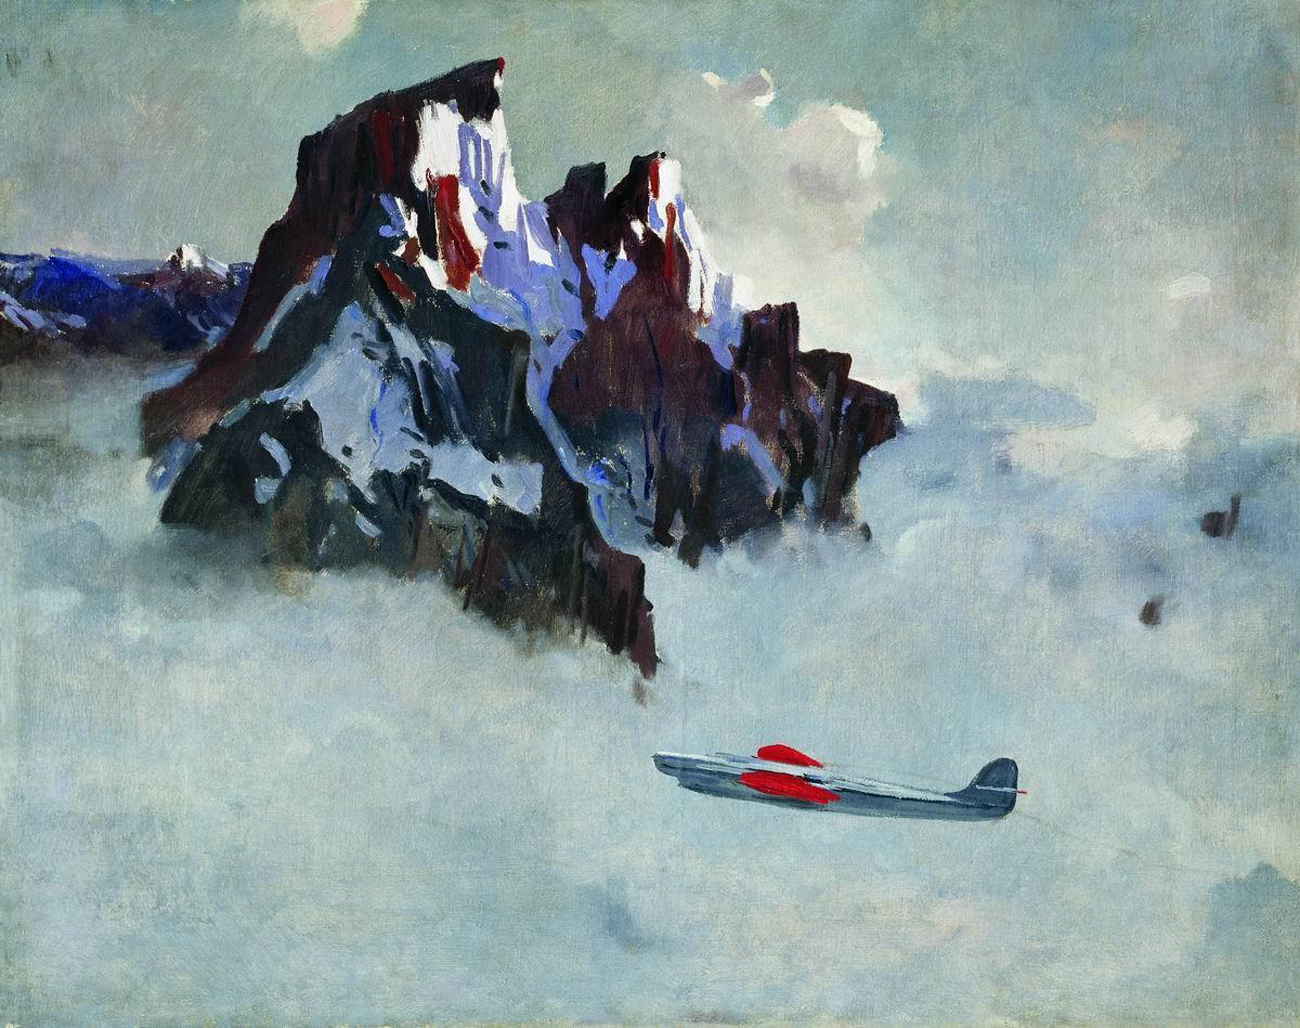 Александр Александрович Дейнека. "В воздухе". 1932.